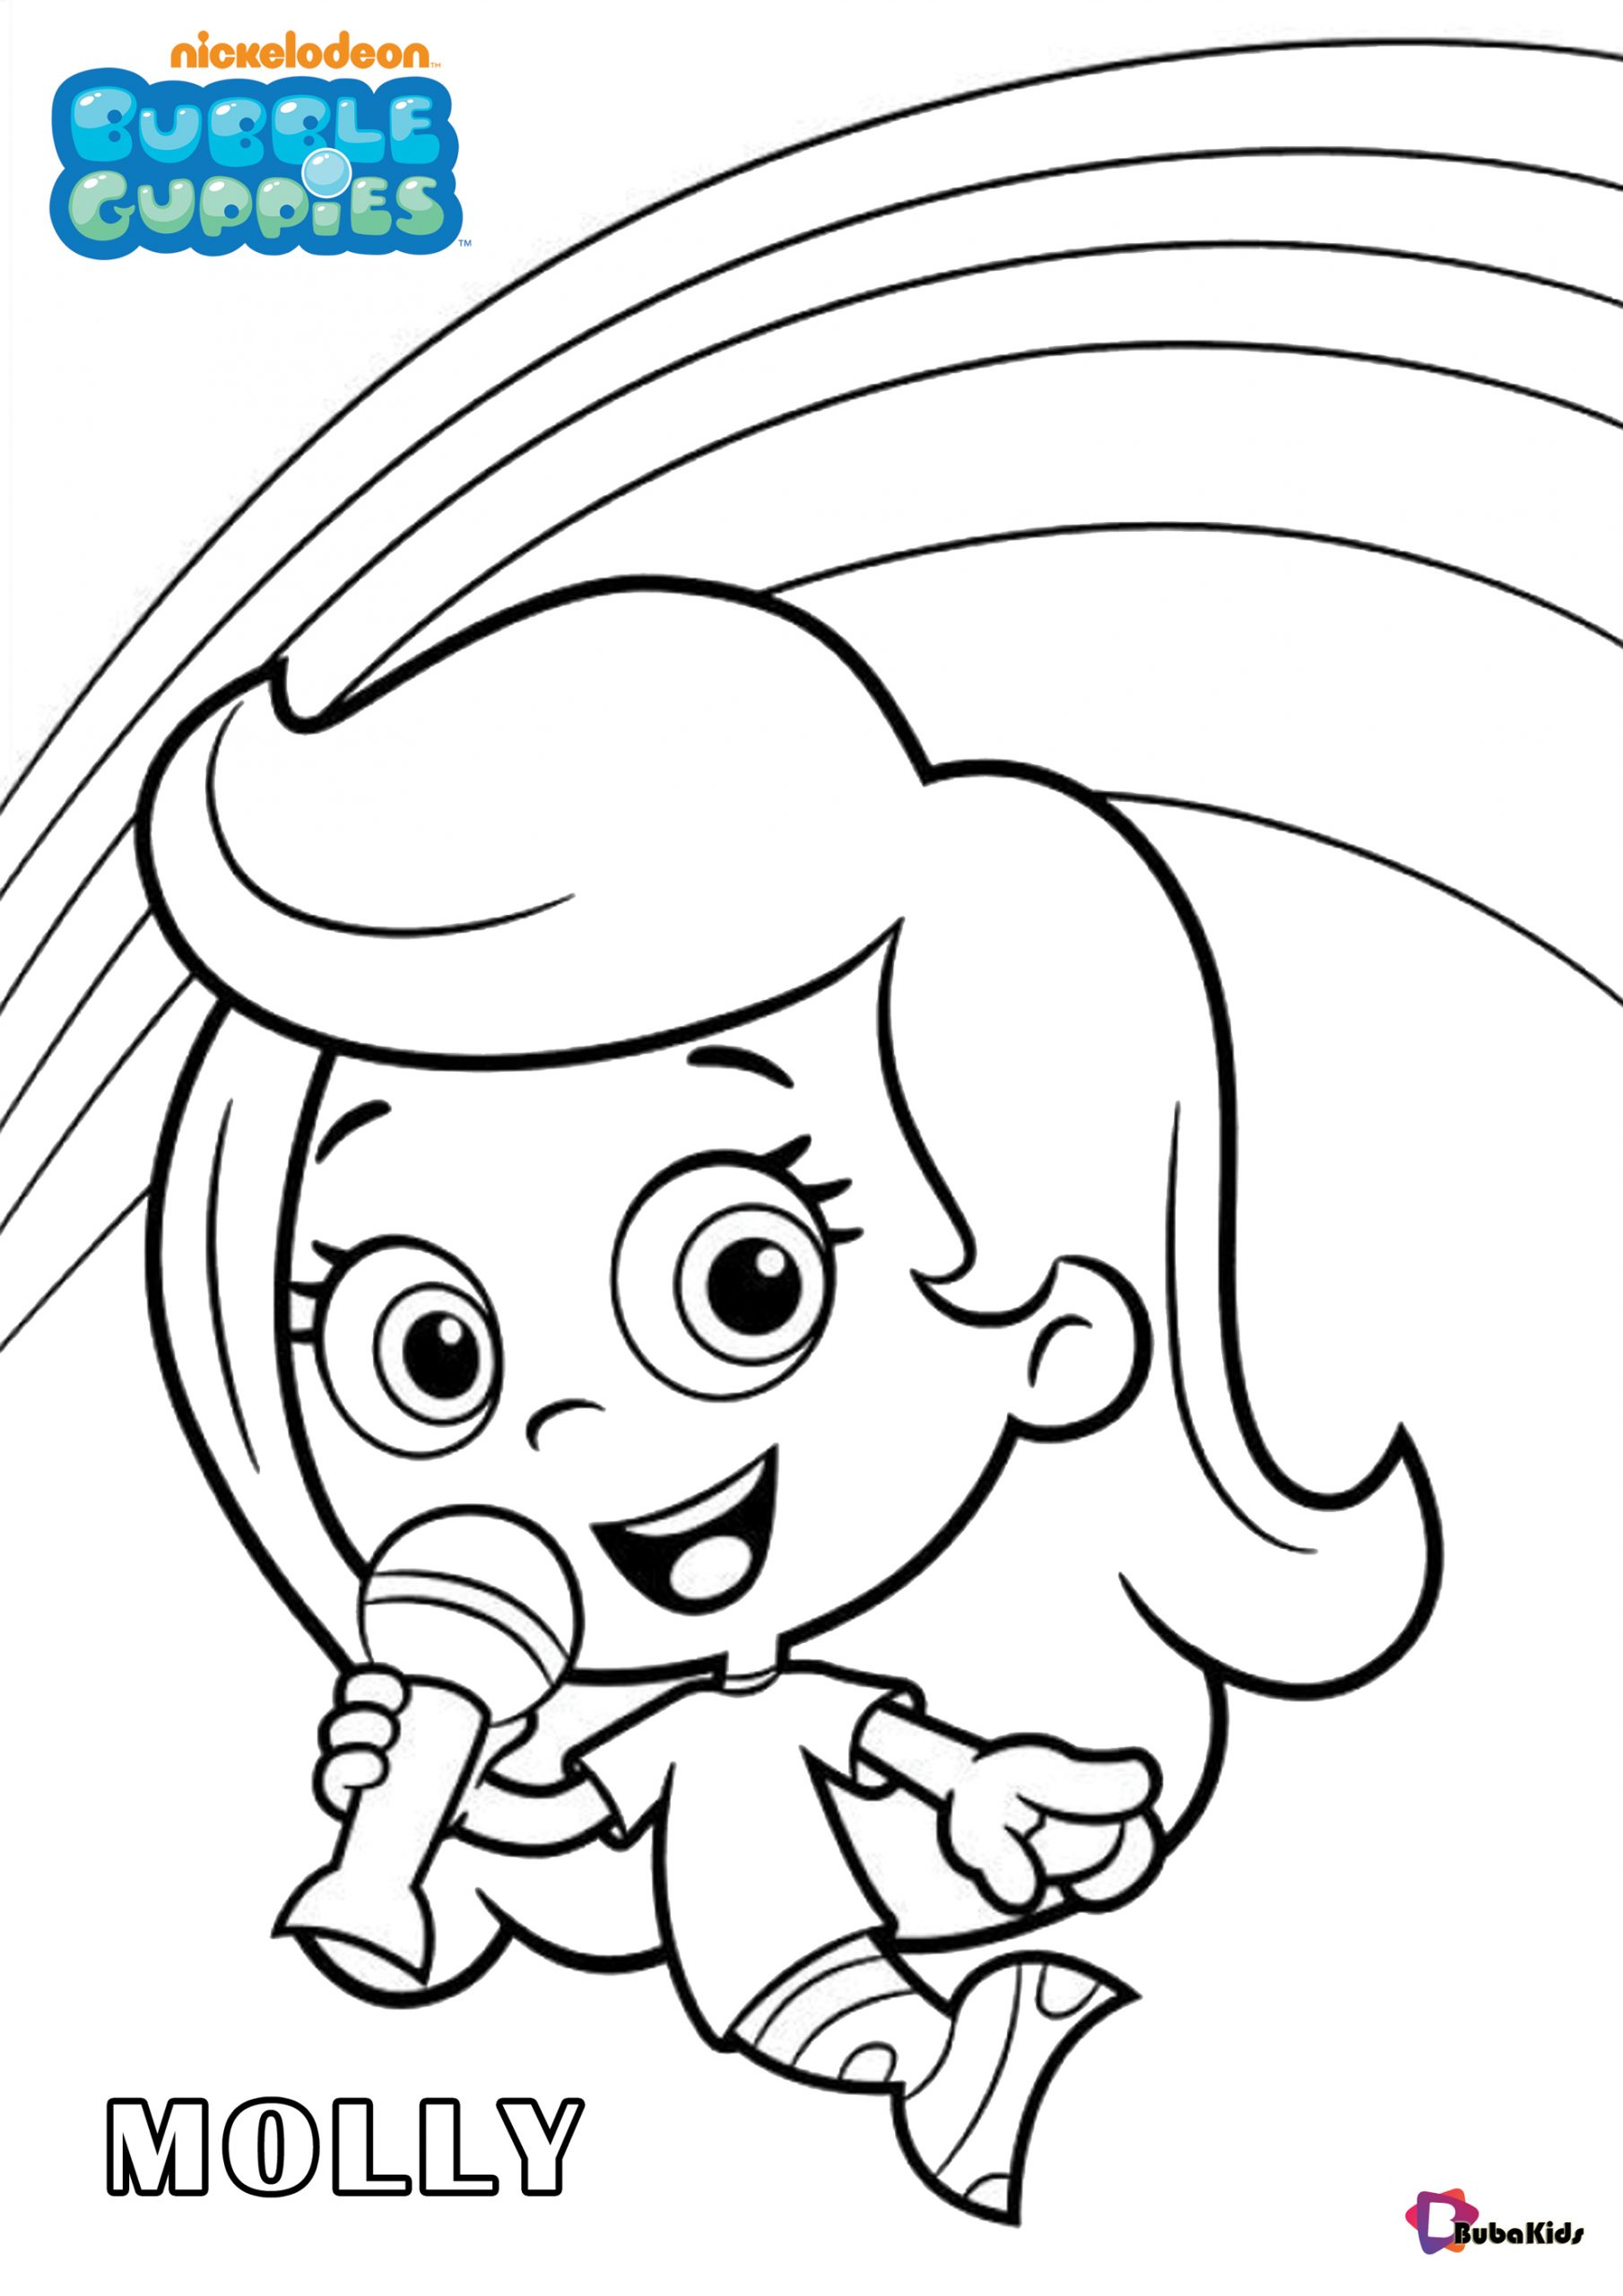 Molly Nickelodeon's Bubble Guppies character coloring sheet